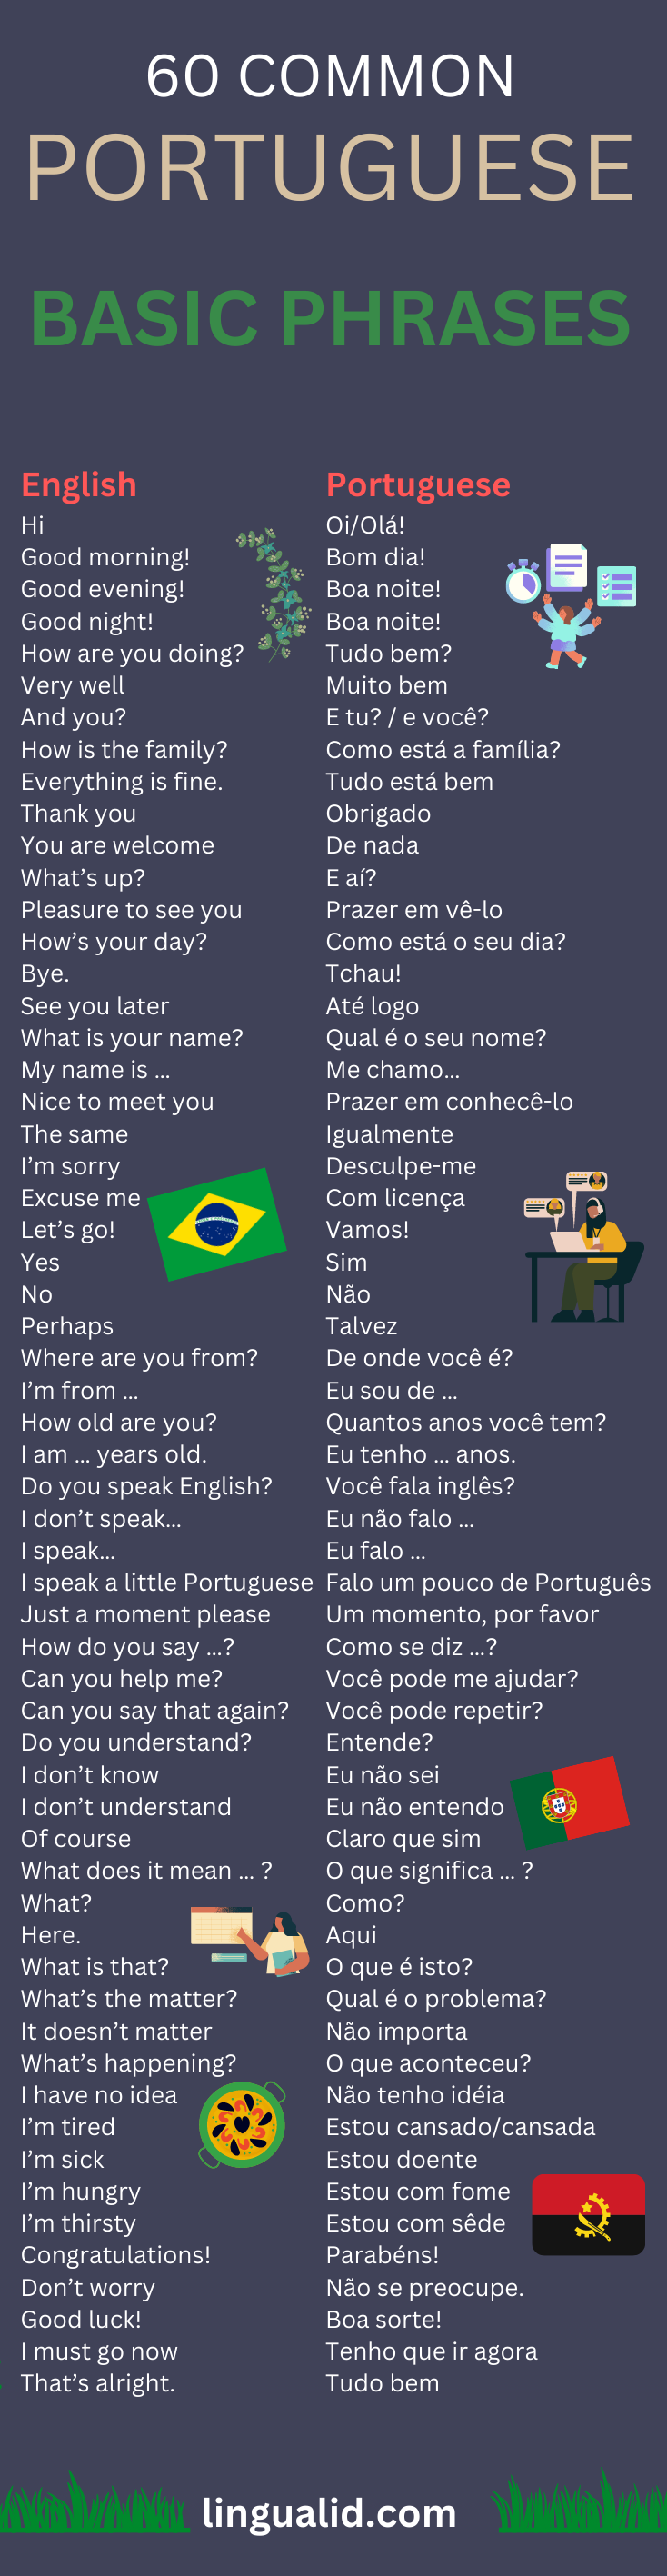 basic portuguese phrases visual